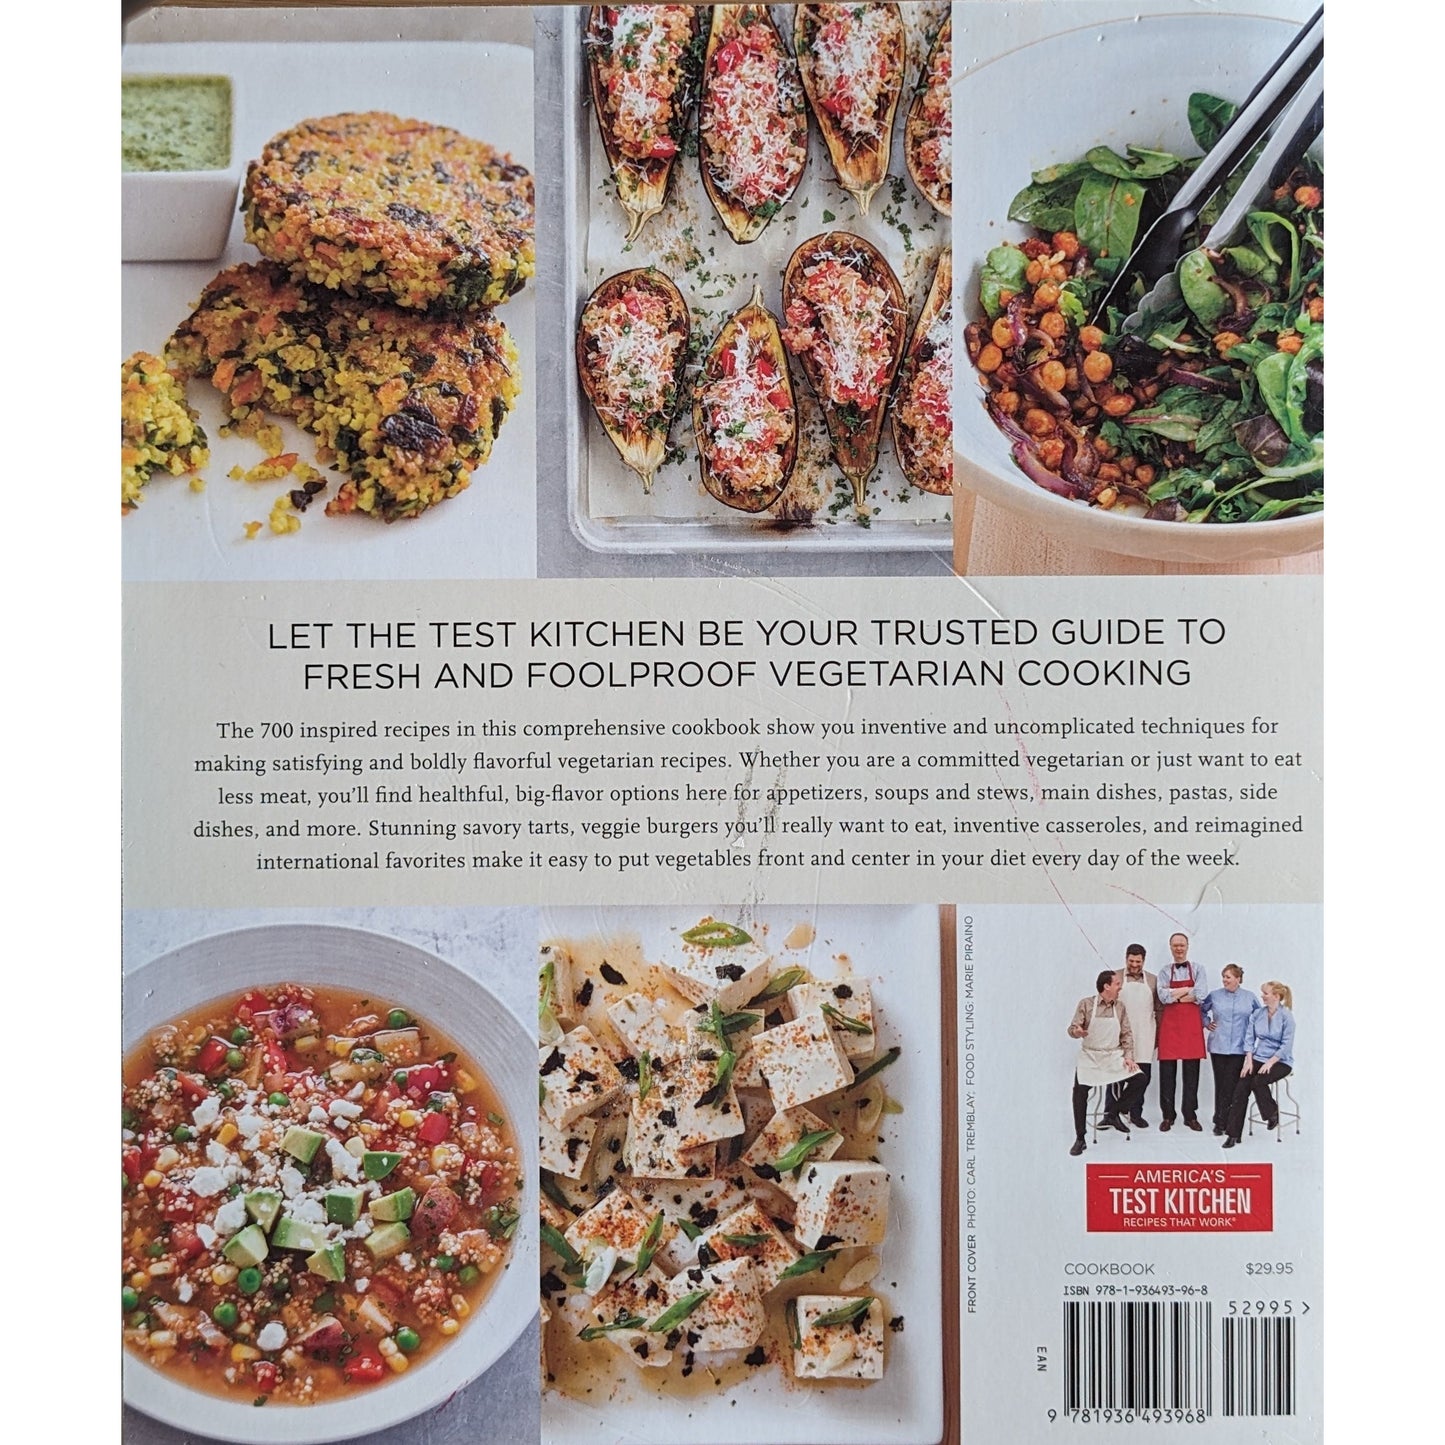 America's Test Kitchen: The Complete Vegetarian Cookbook